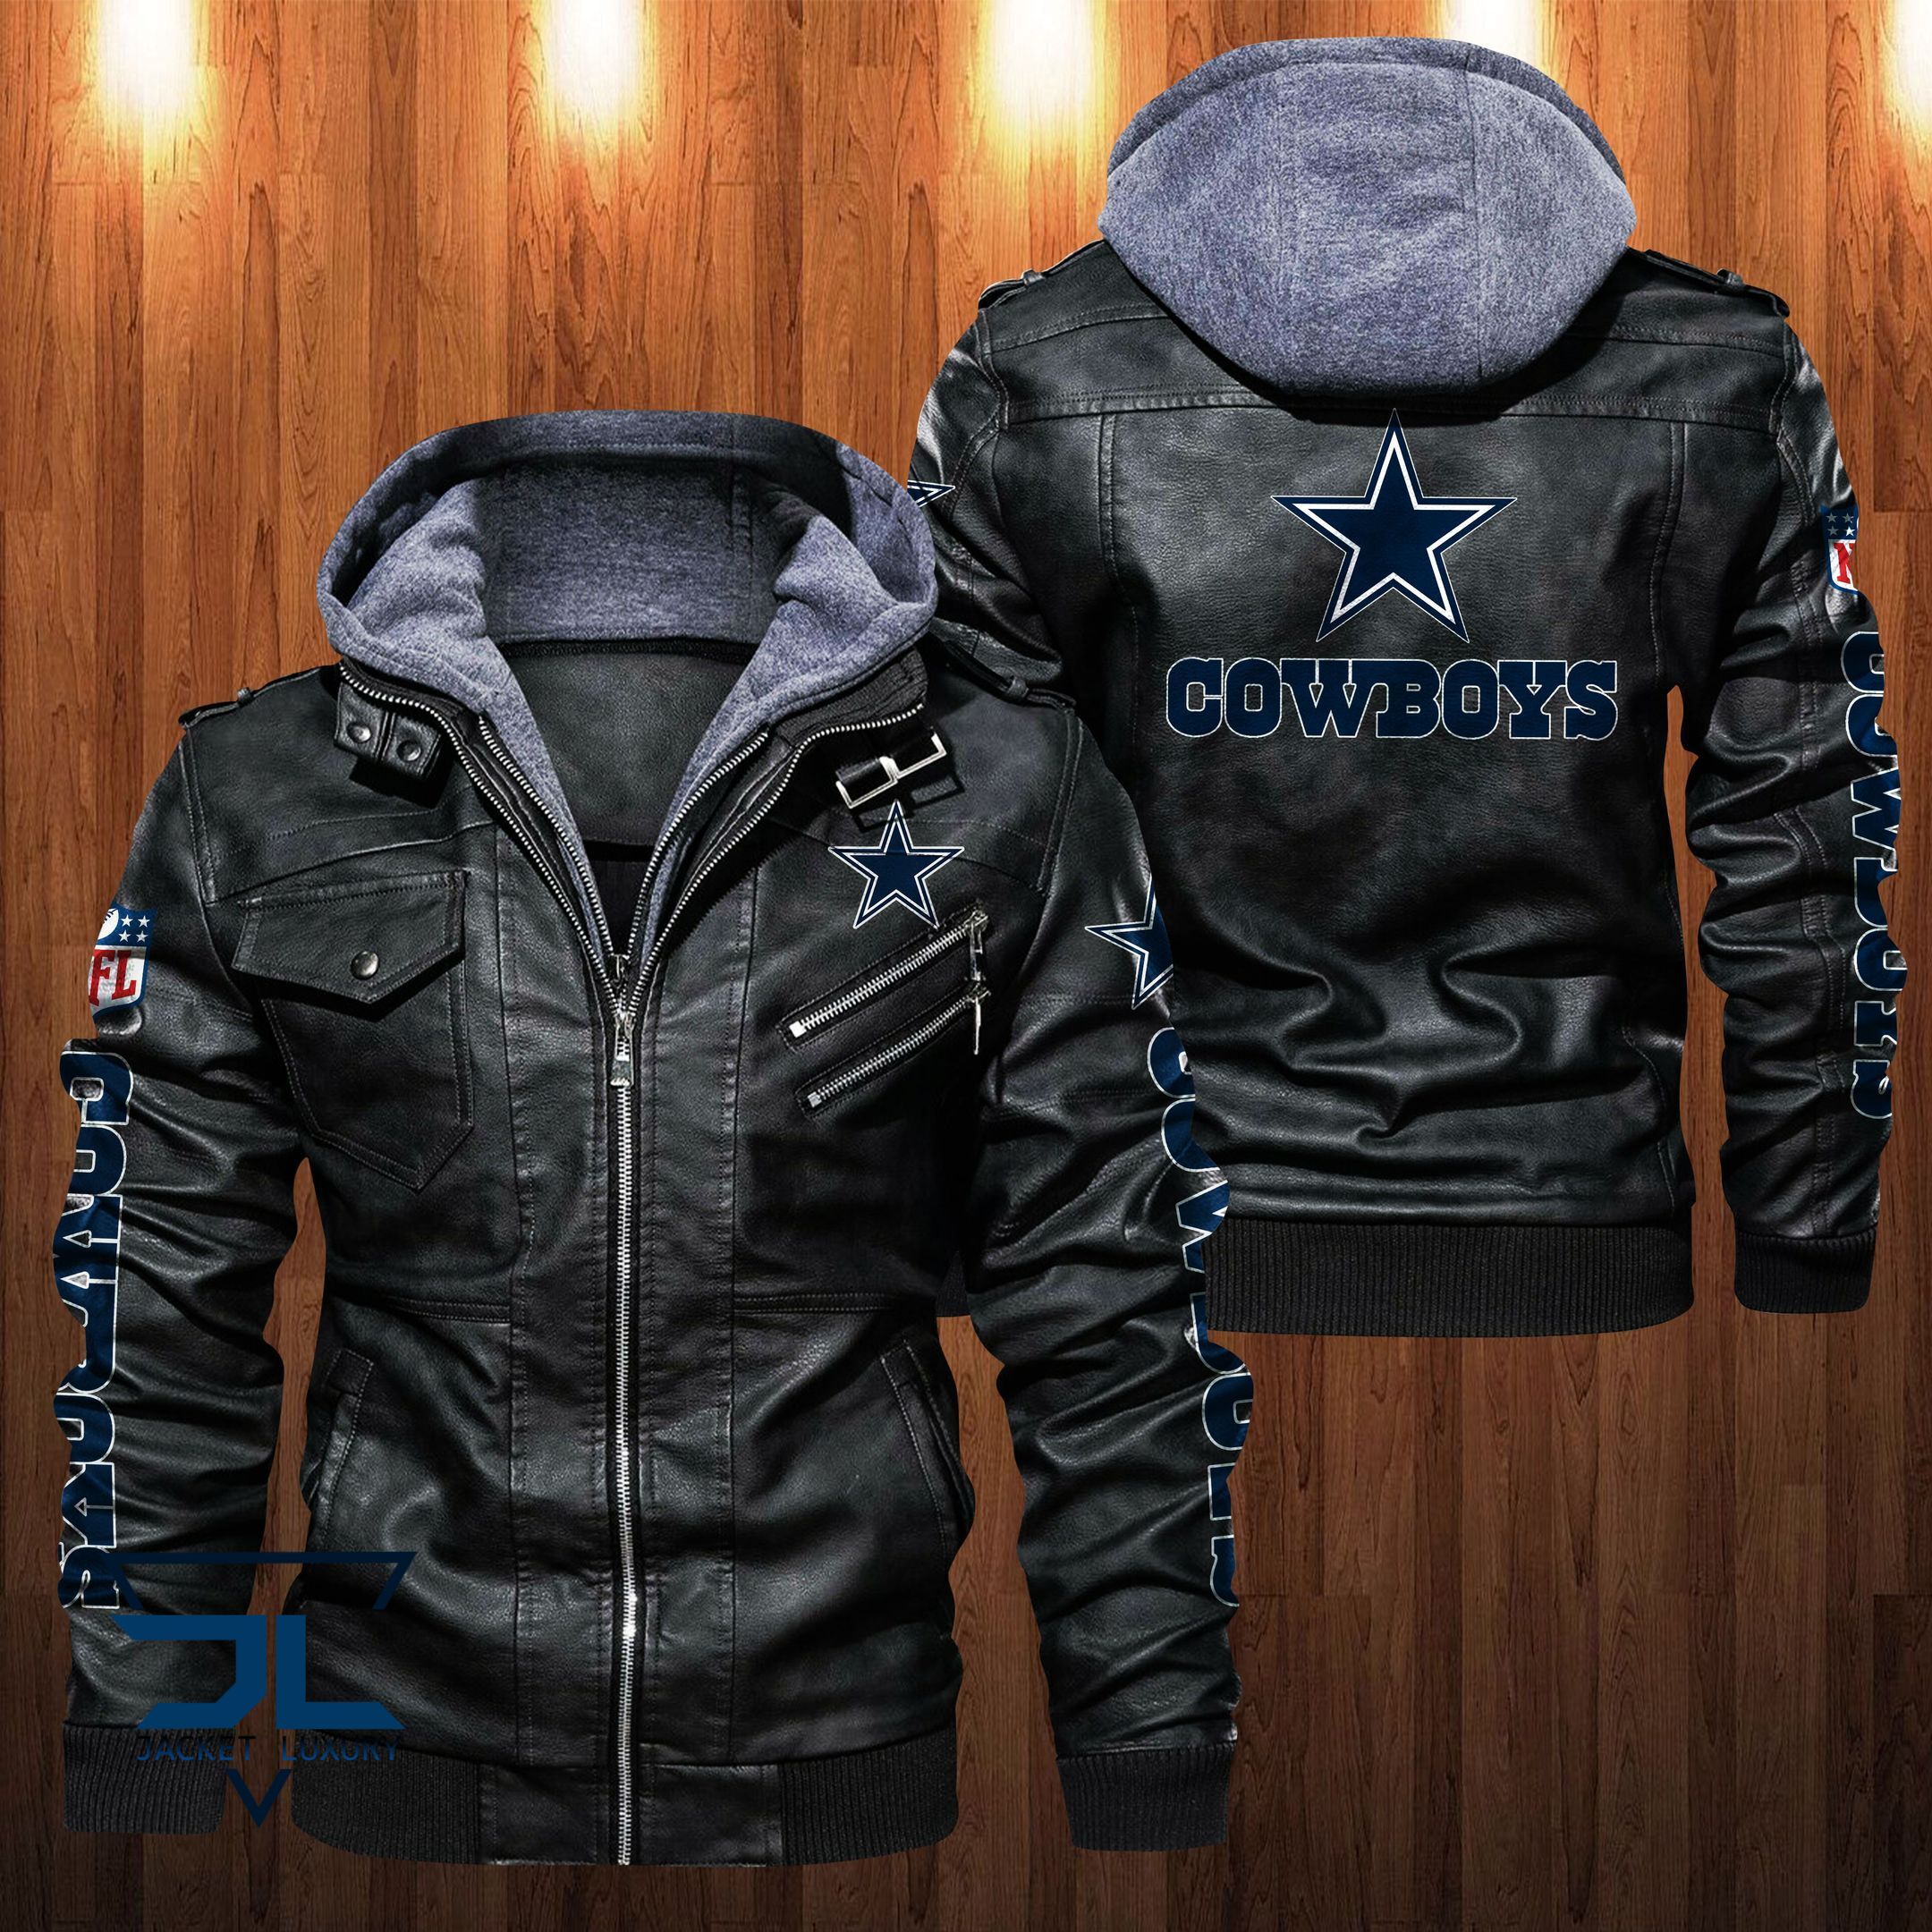 What Leather jacket Sells Best on Techcomshop? 102